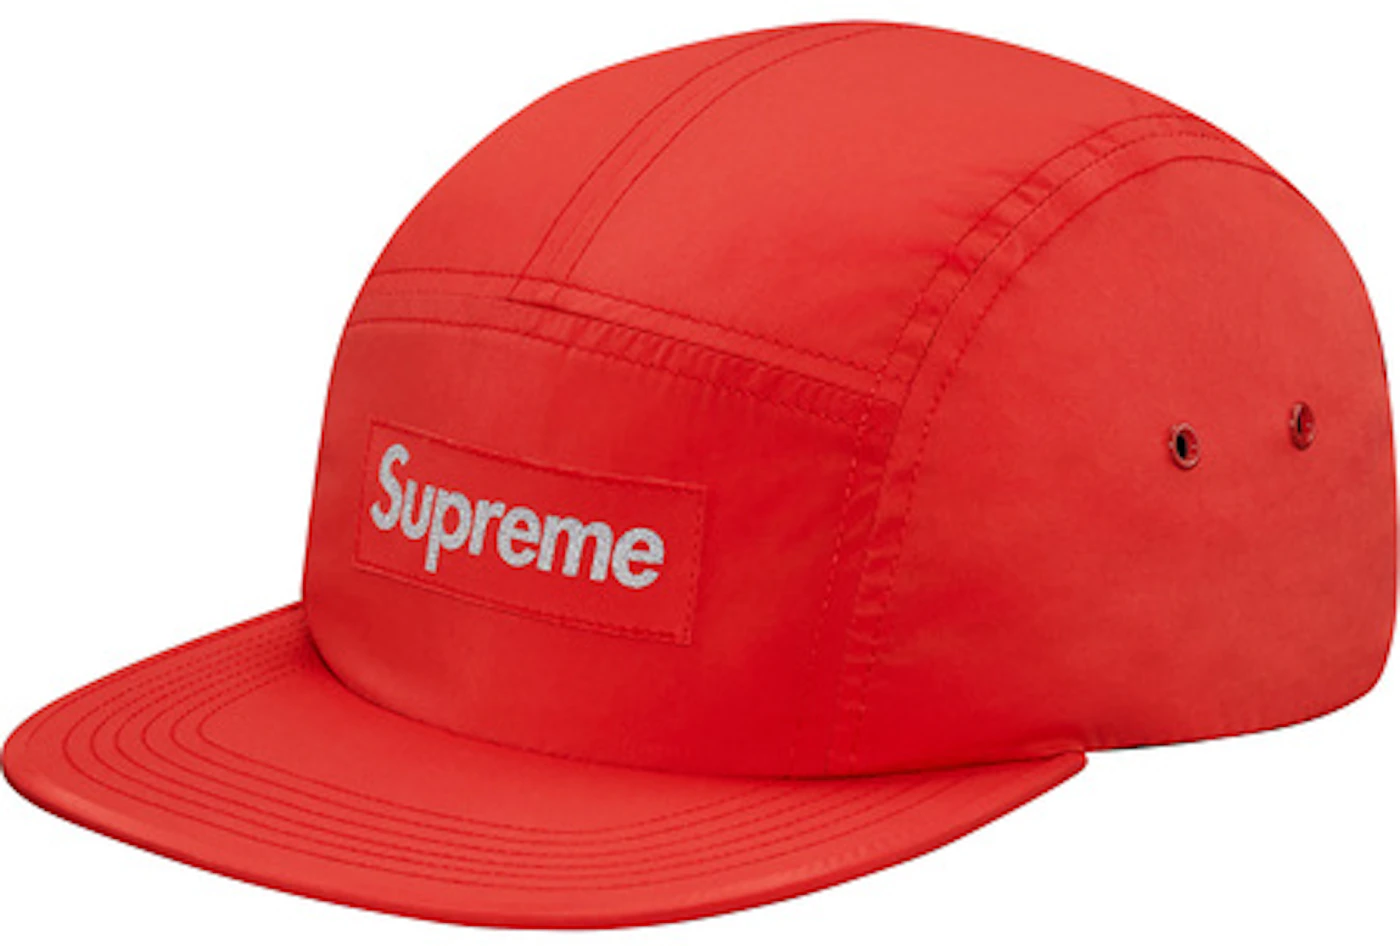 Supreme Frayed Logos Red Denim Camp Cap Hat Red - Depop